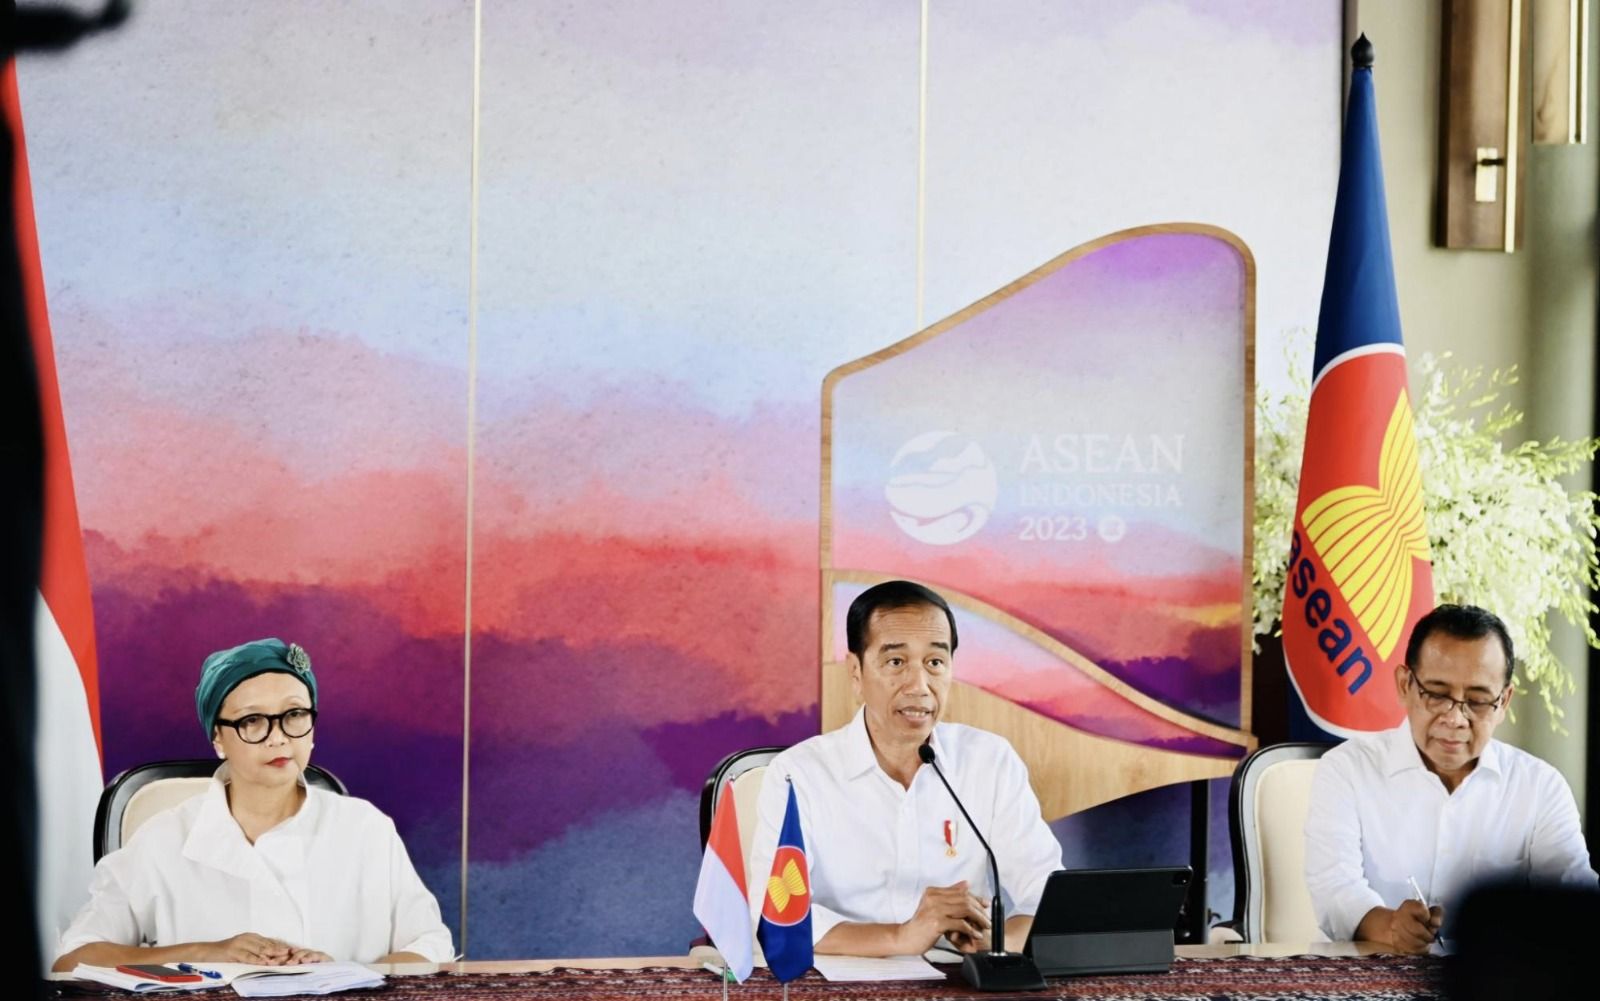 Presiden Jokowi dalam konferensi pers di Hotel Meruorah, Kabupaten Manggarai Barat, Provinsi Nusa Tenggara Timur, Senin (8/5/2023).